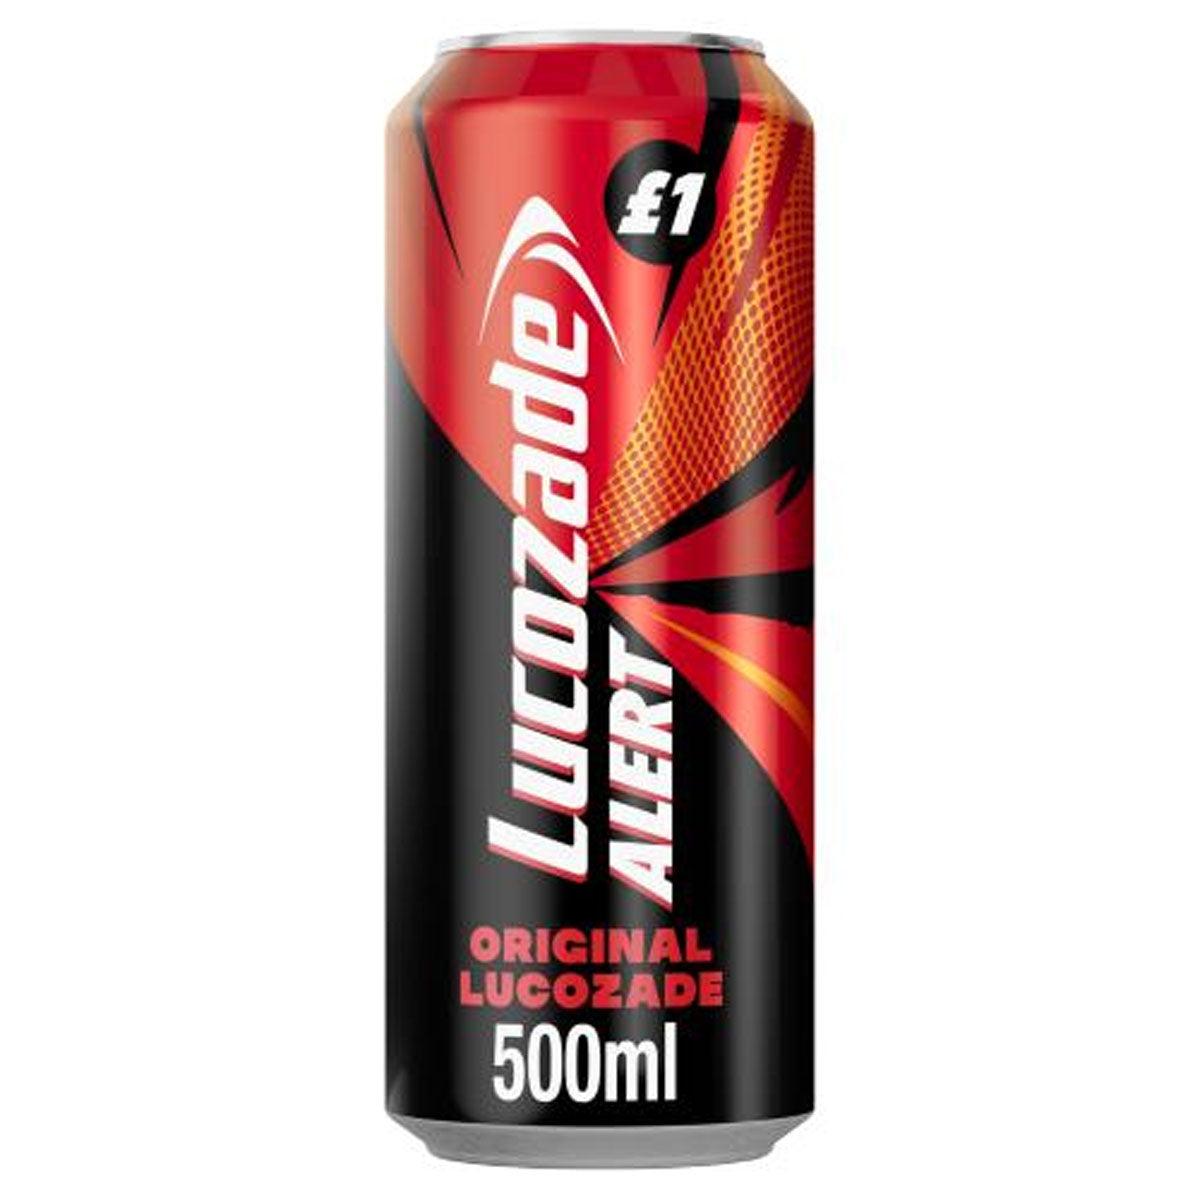 Lucozade - Alert Original Energy Drink - 500ml - Continental Food Store